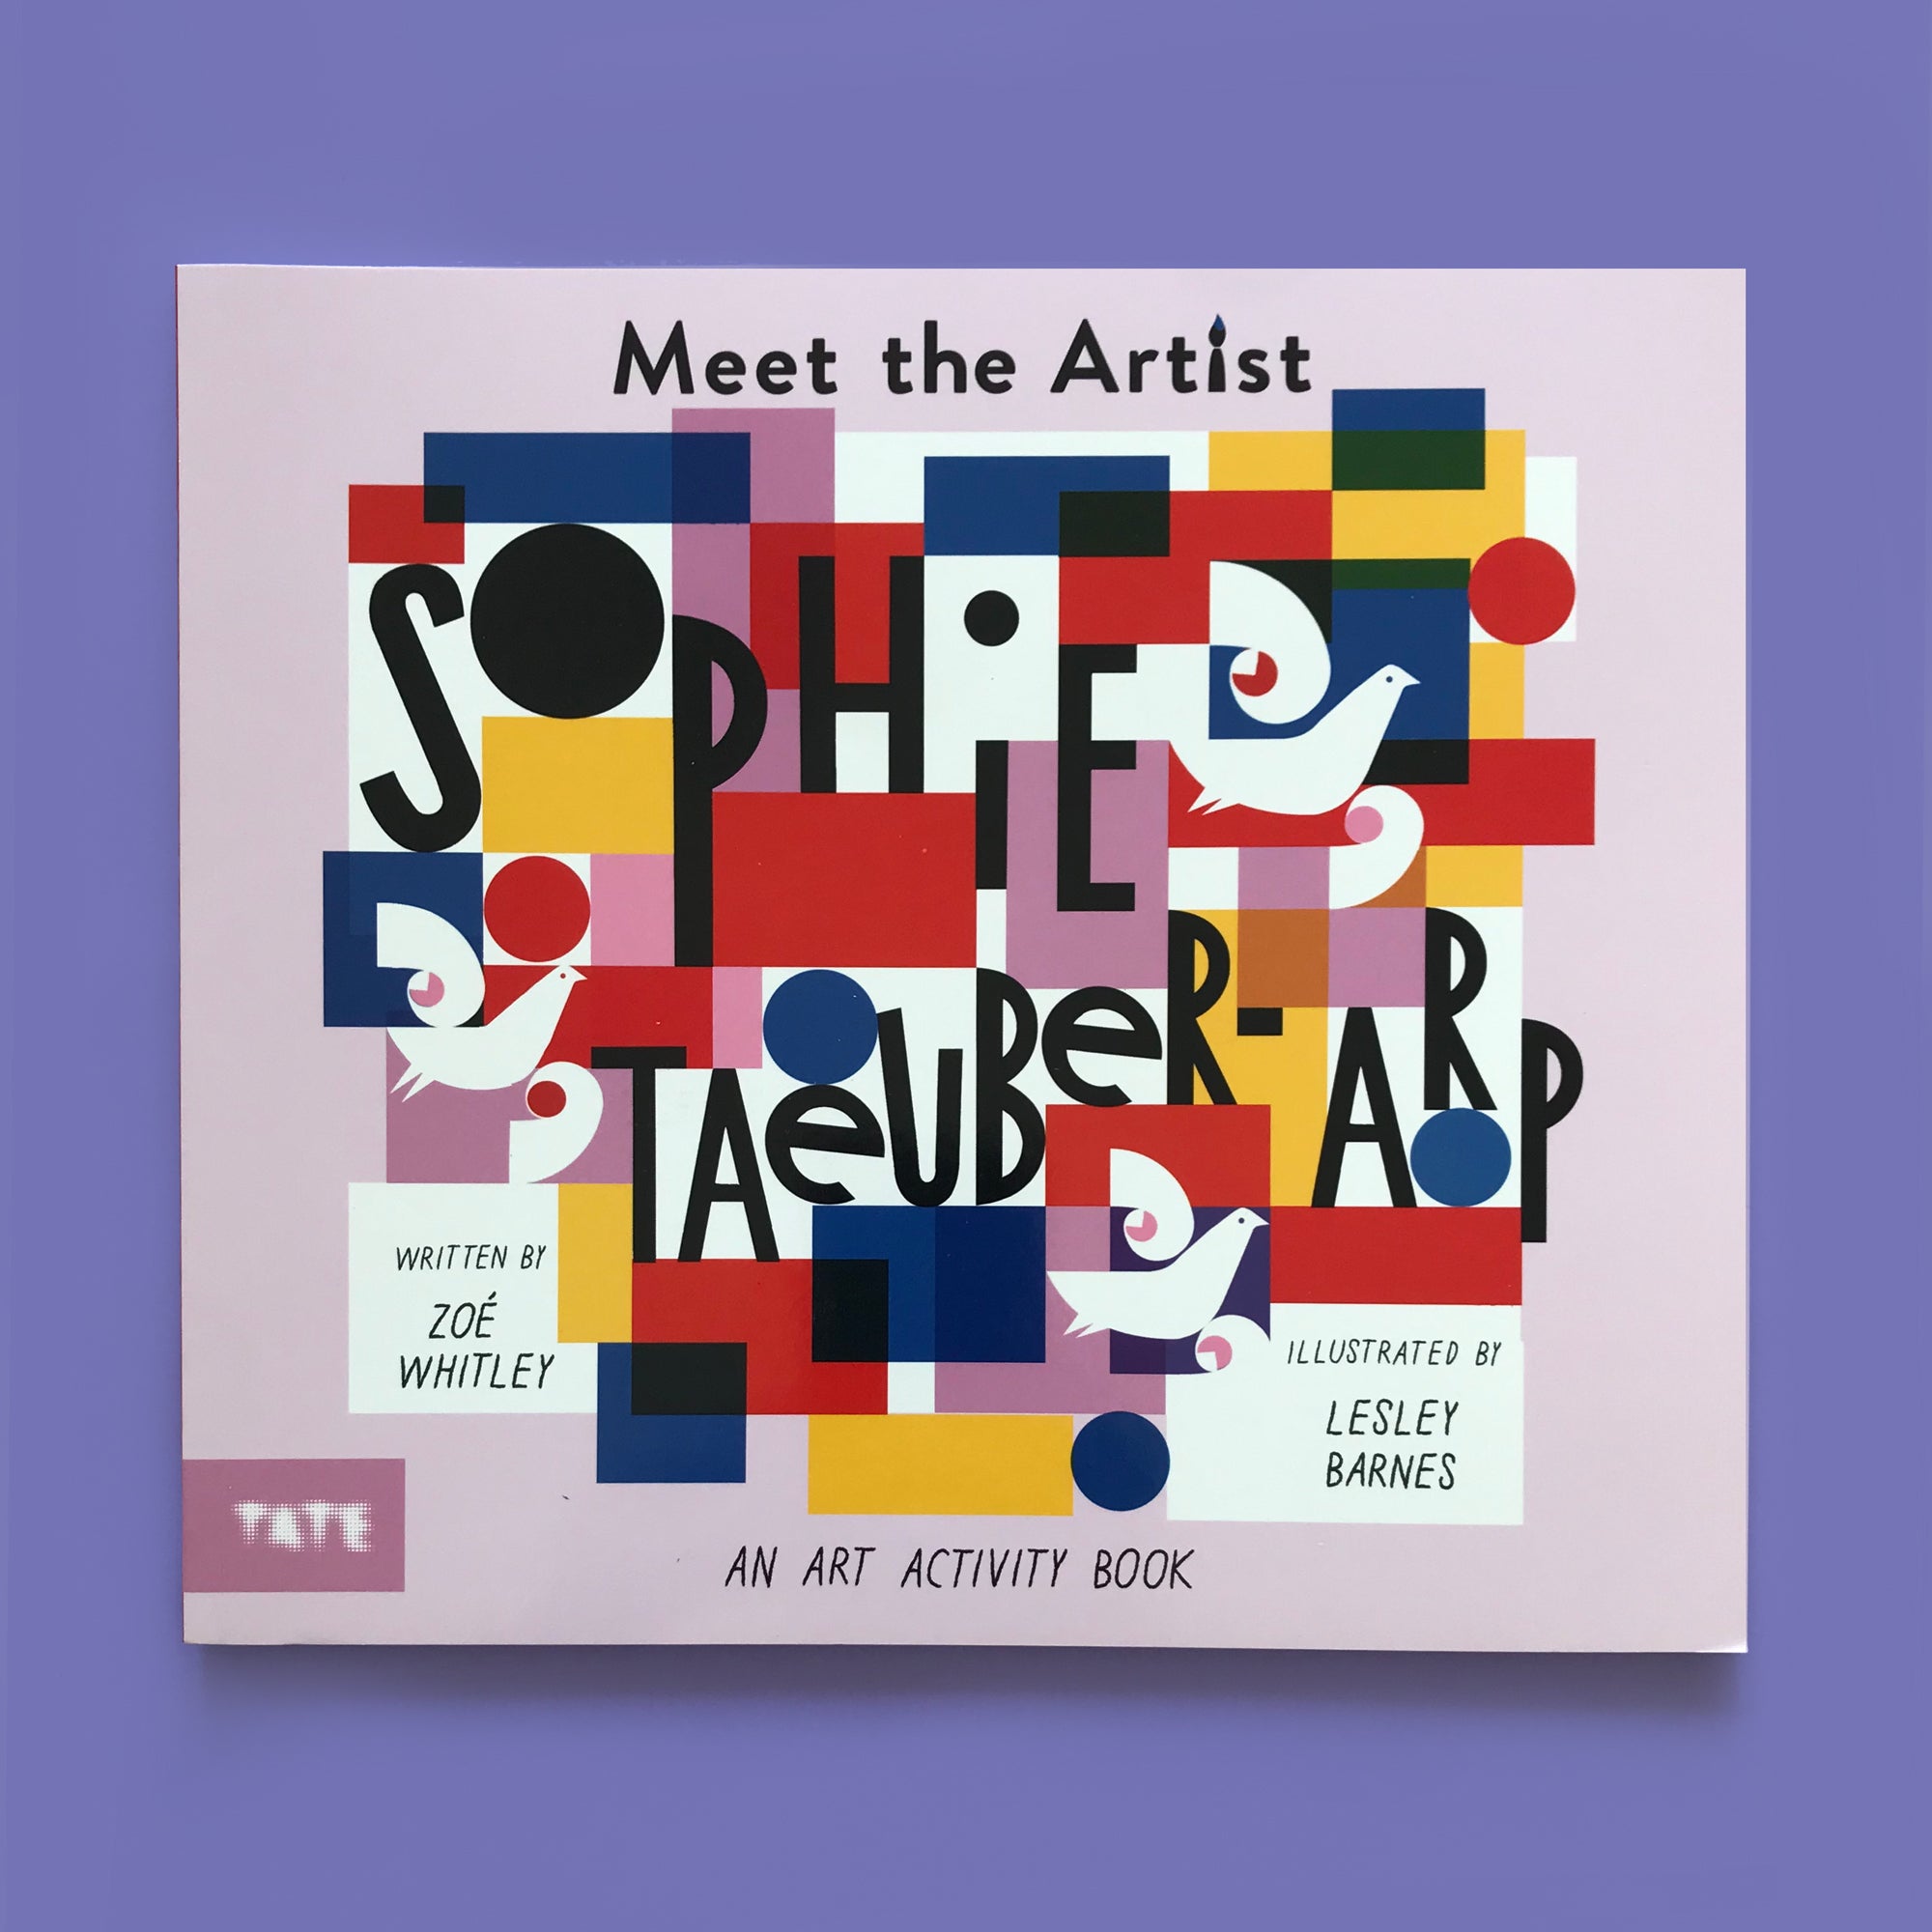 Meet the Artist: Sophie Taeuber-Arp activity book